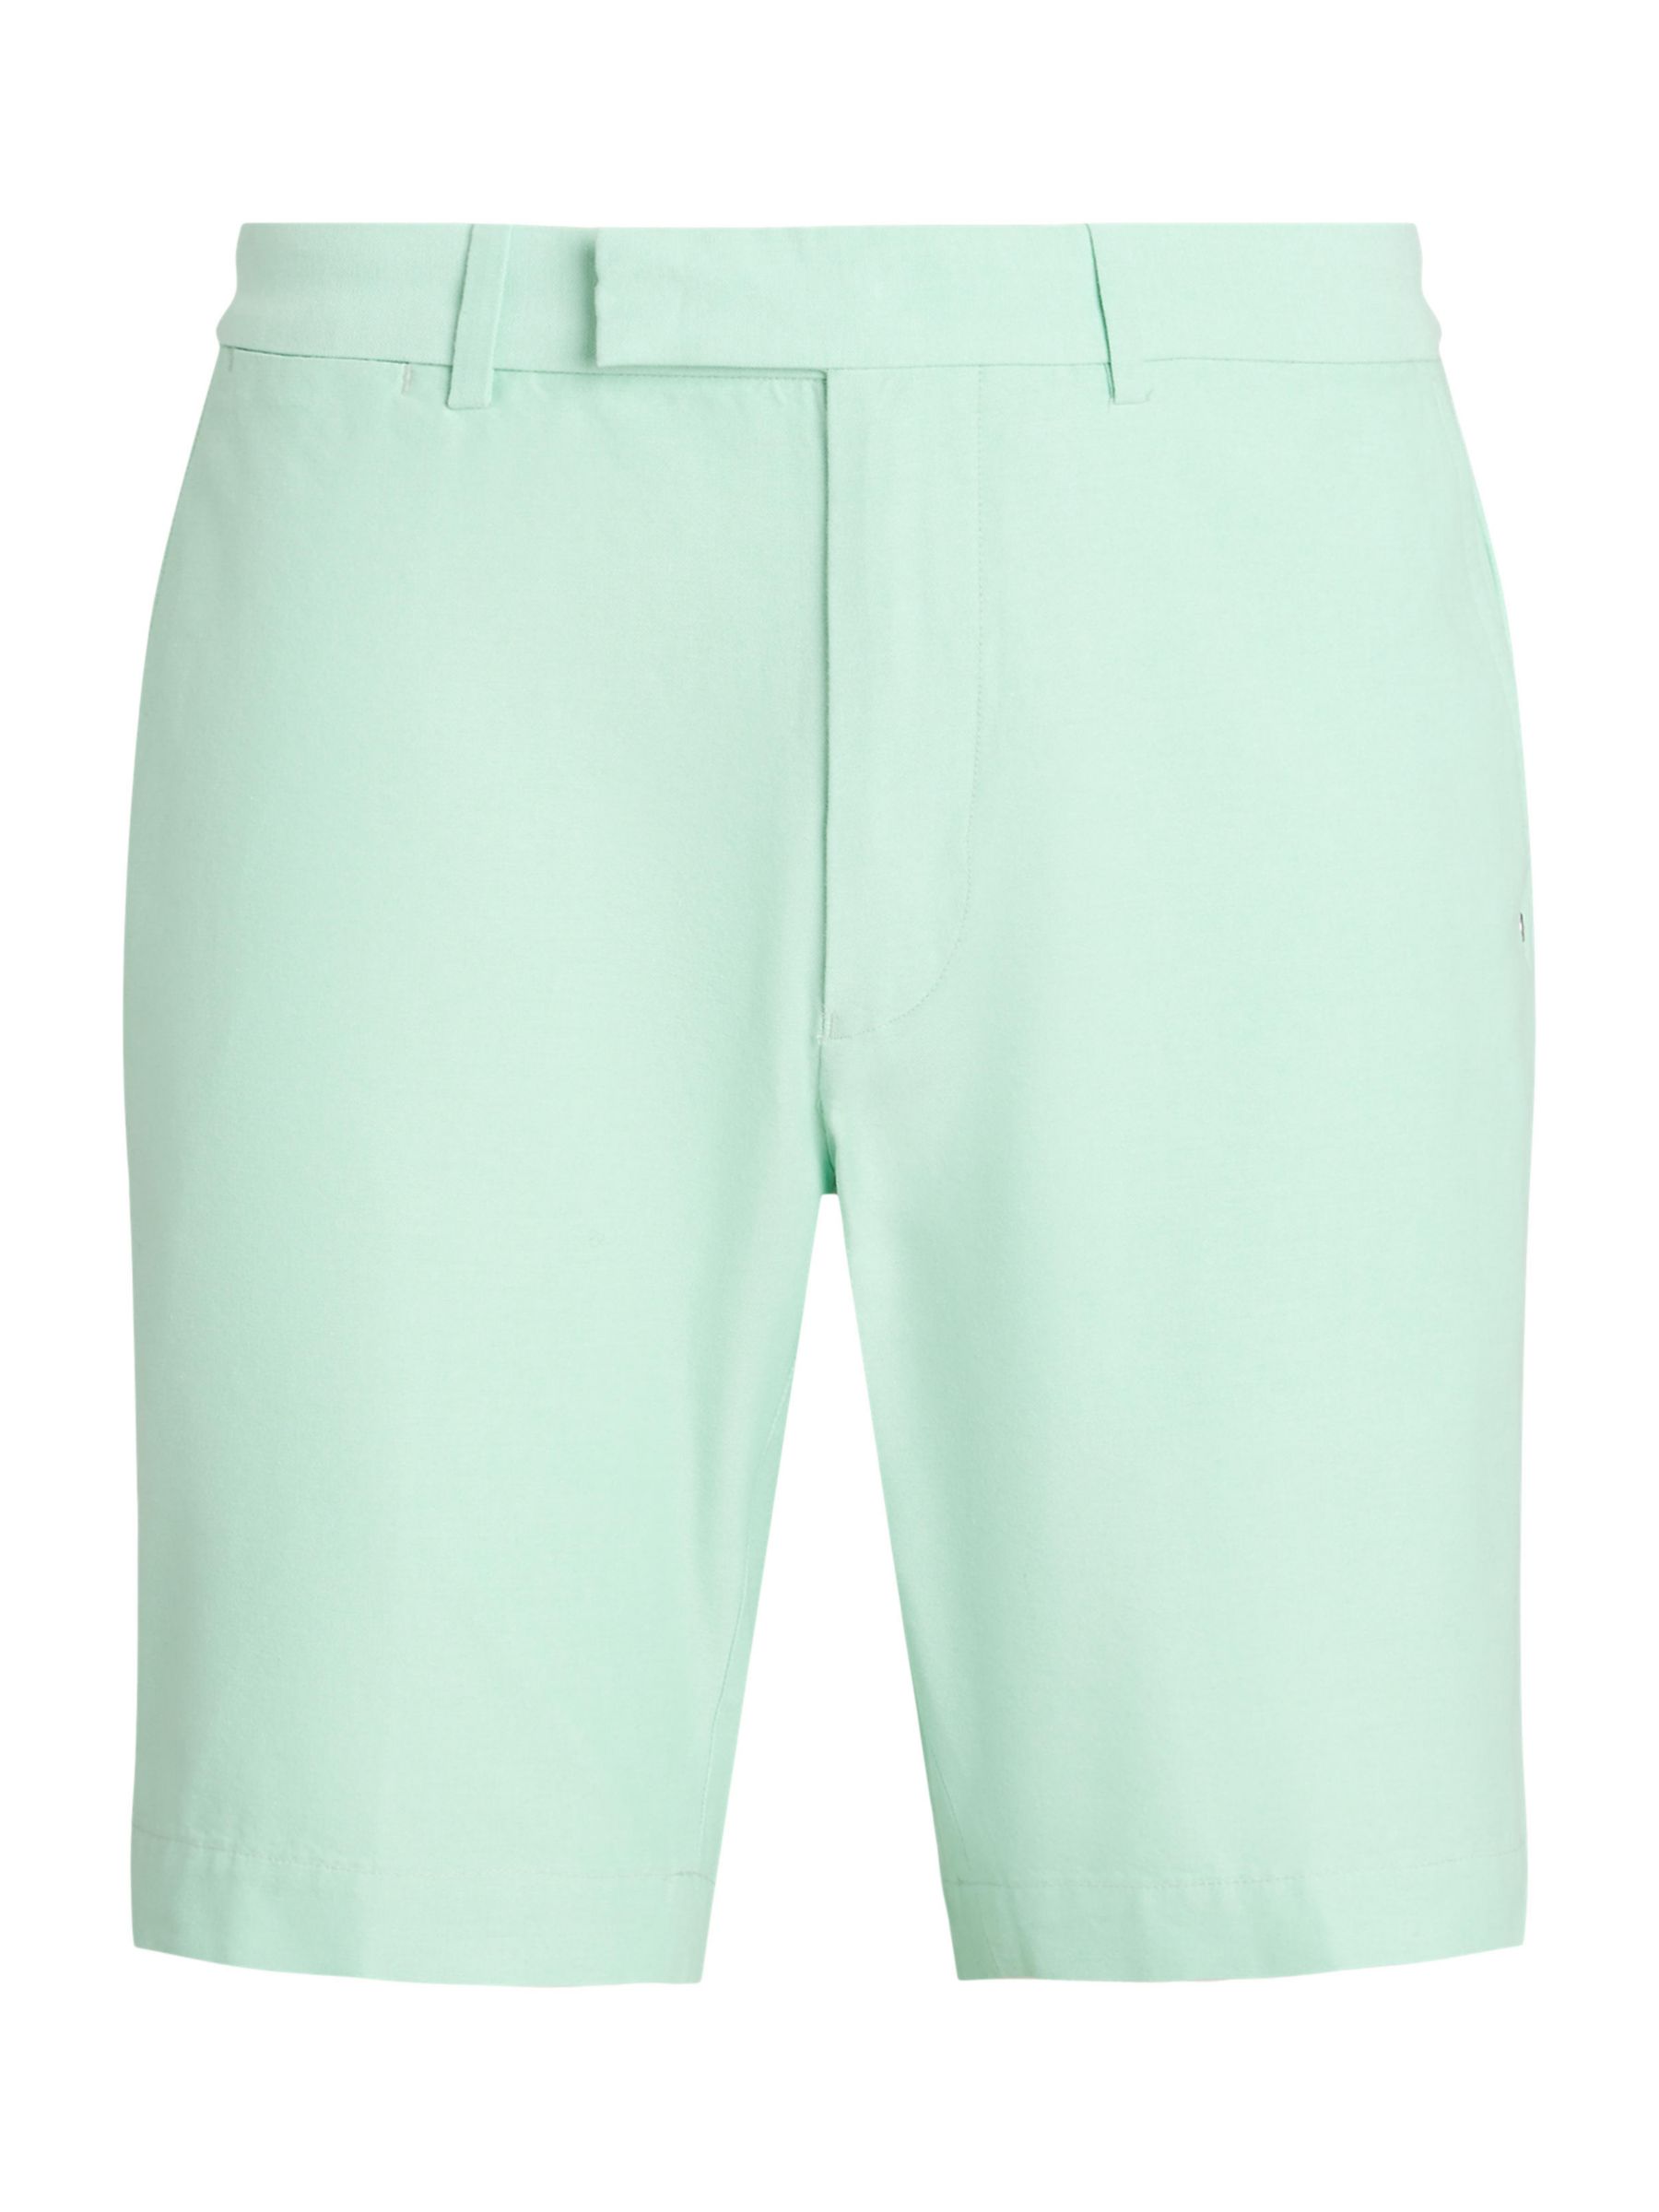 Ralph Lauren 9-Inch Tailored Fit Performance Shorts, Pastel Mint, 32R